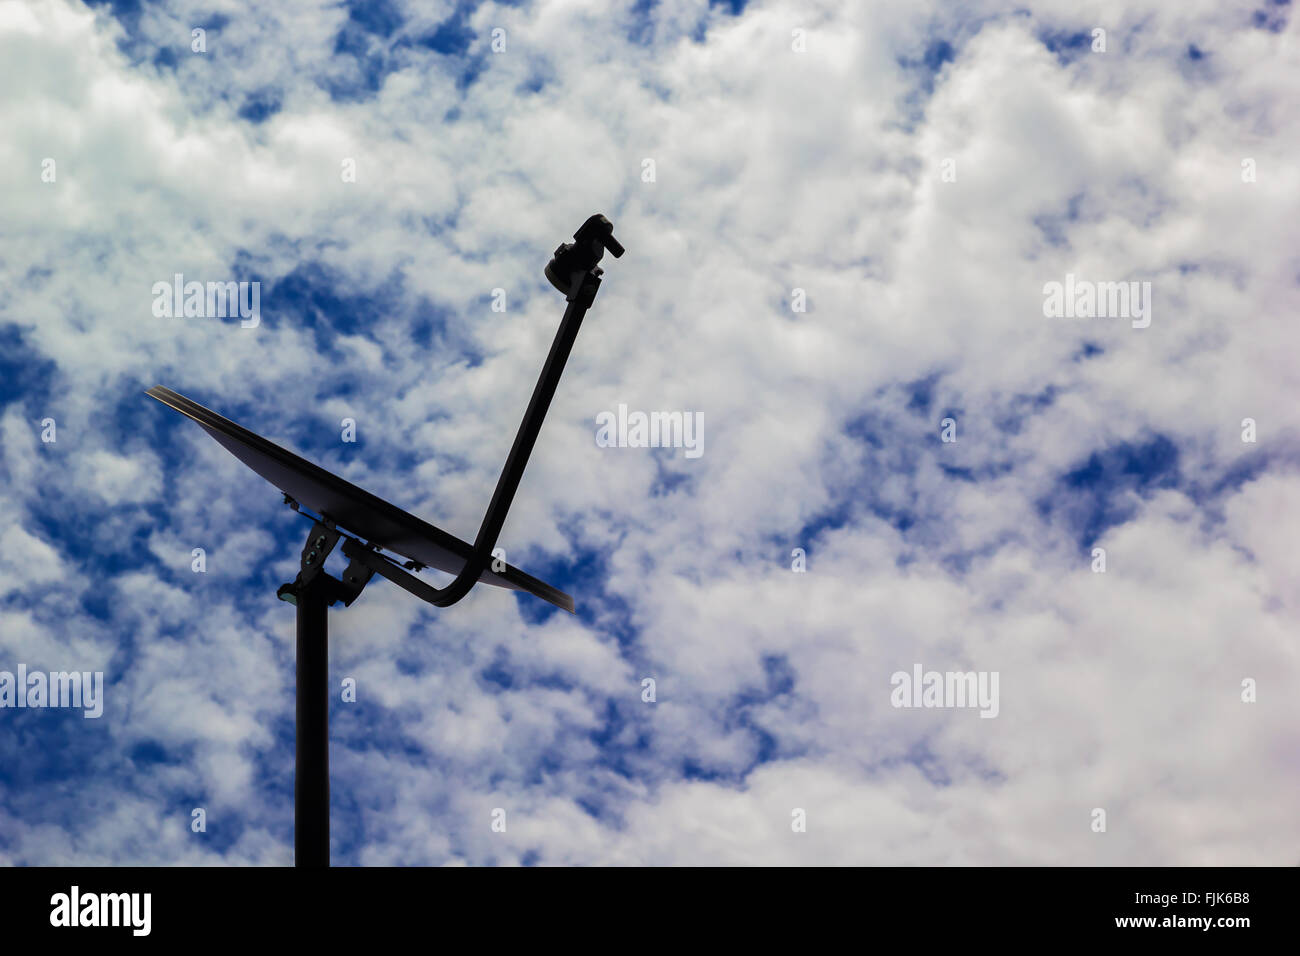 A photo of Satellite dish on Blue sky background Stock Photo